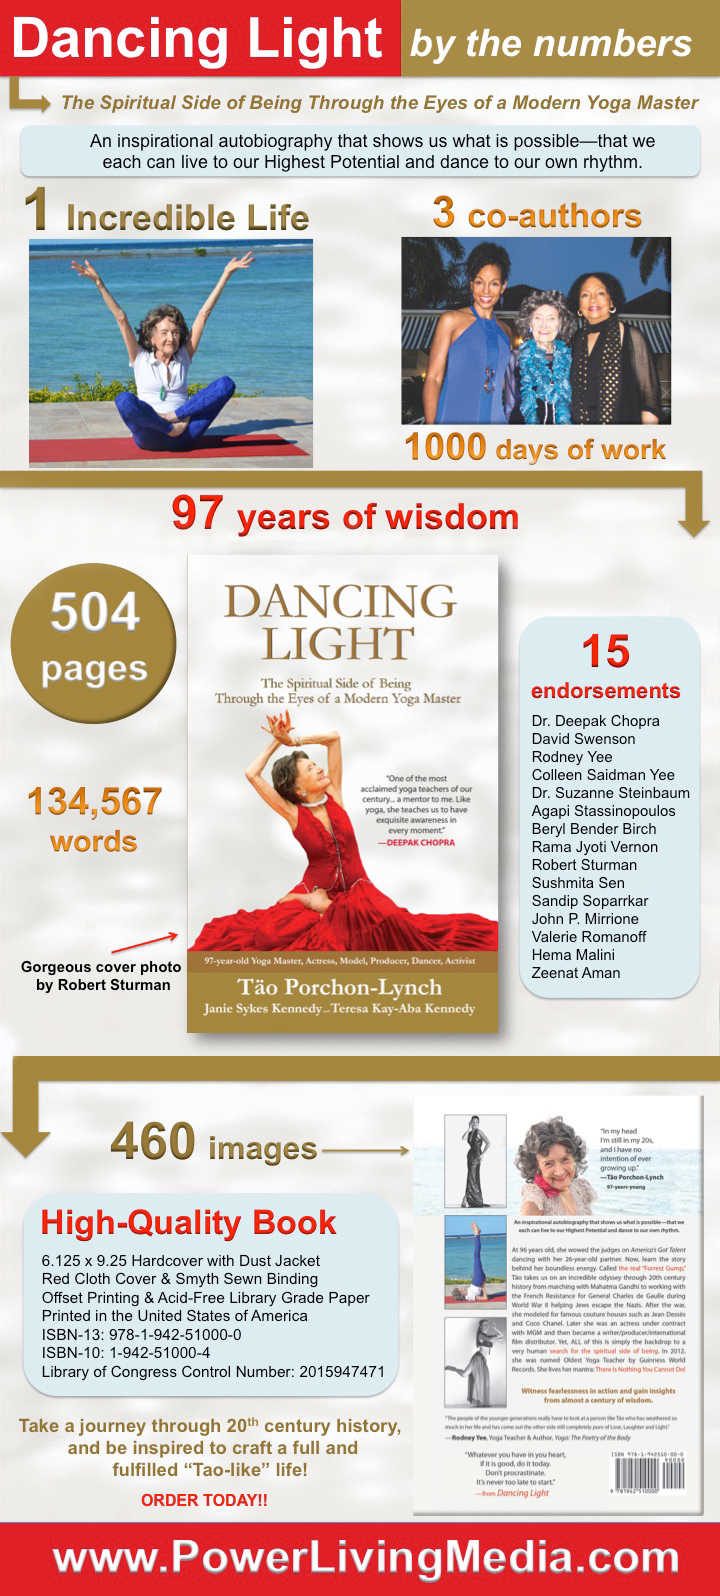 DancingLight_Infographic080315R6FJ